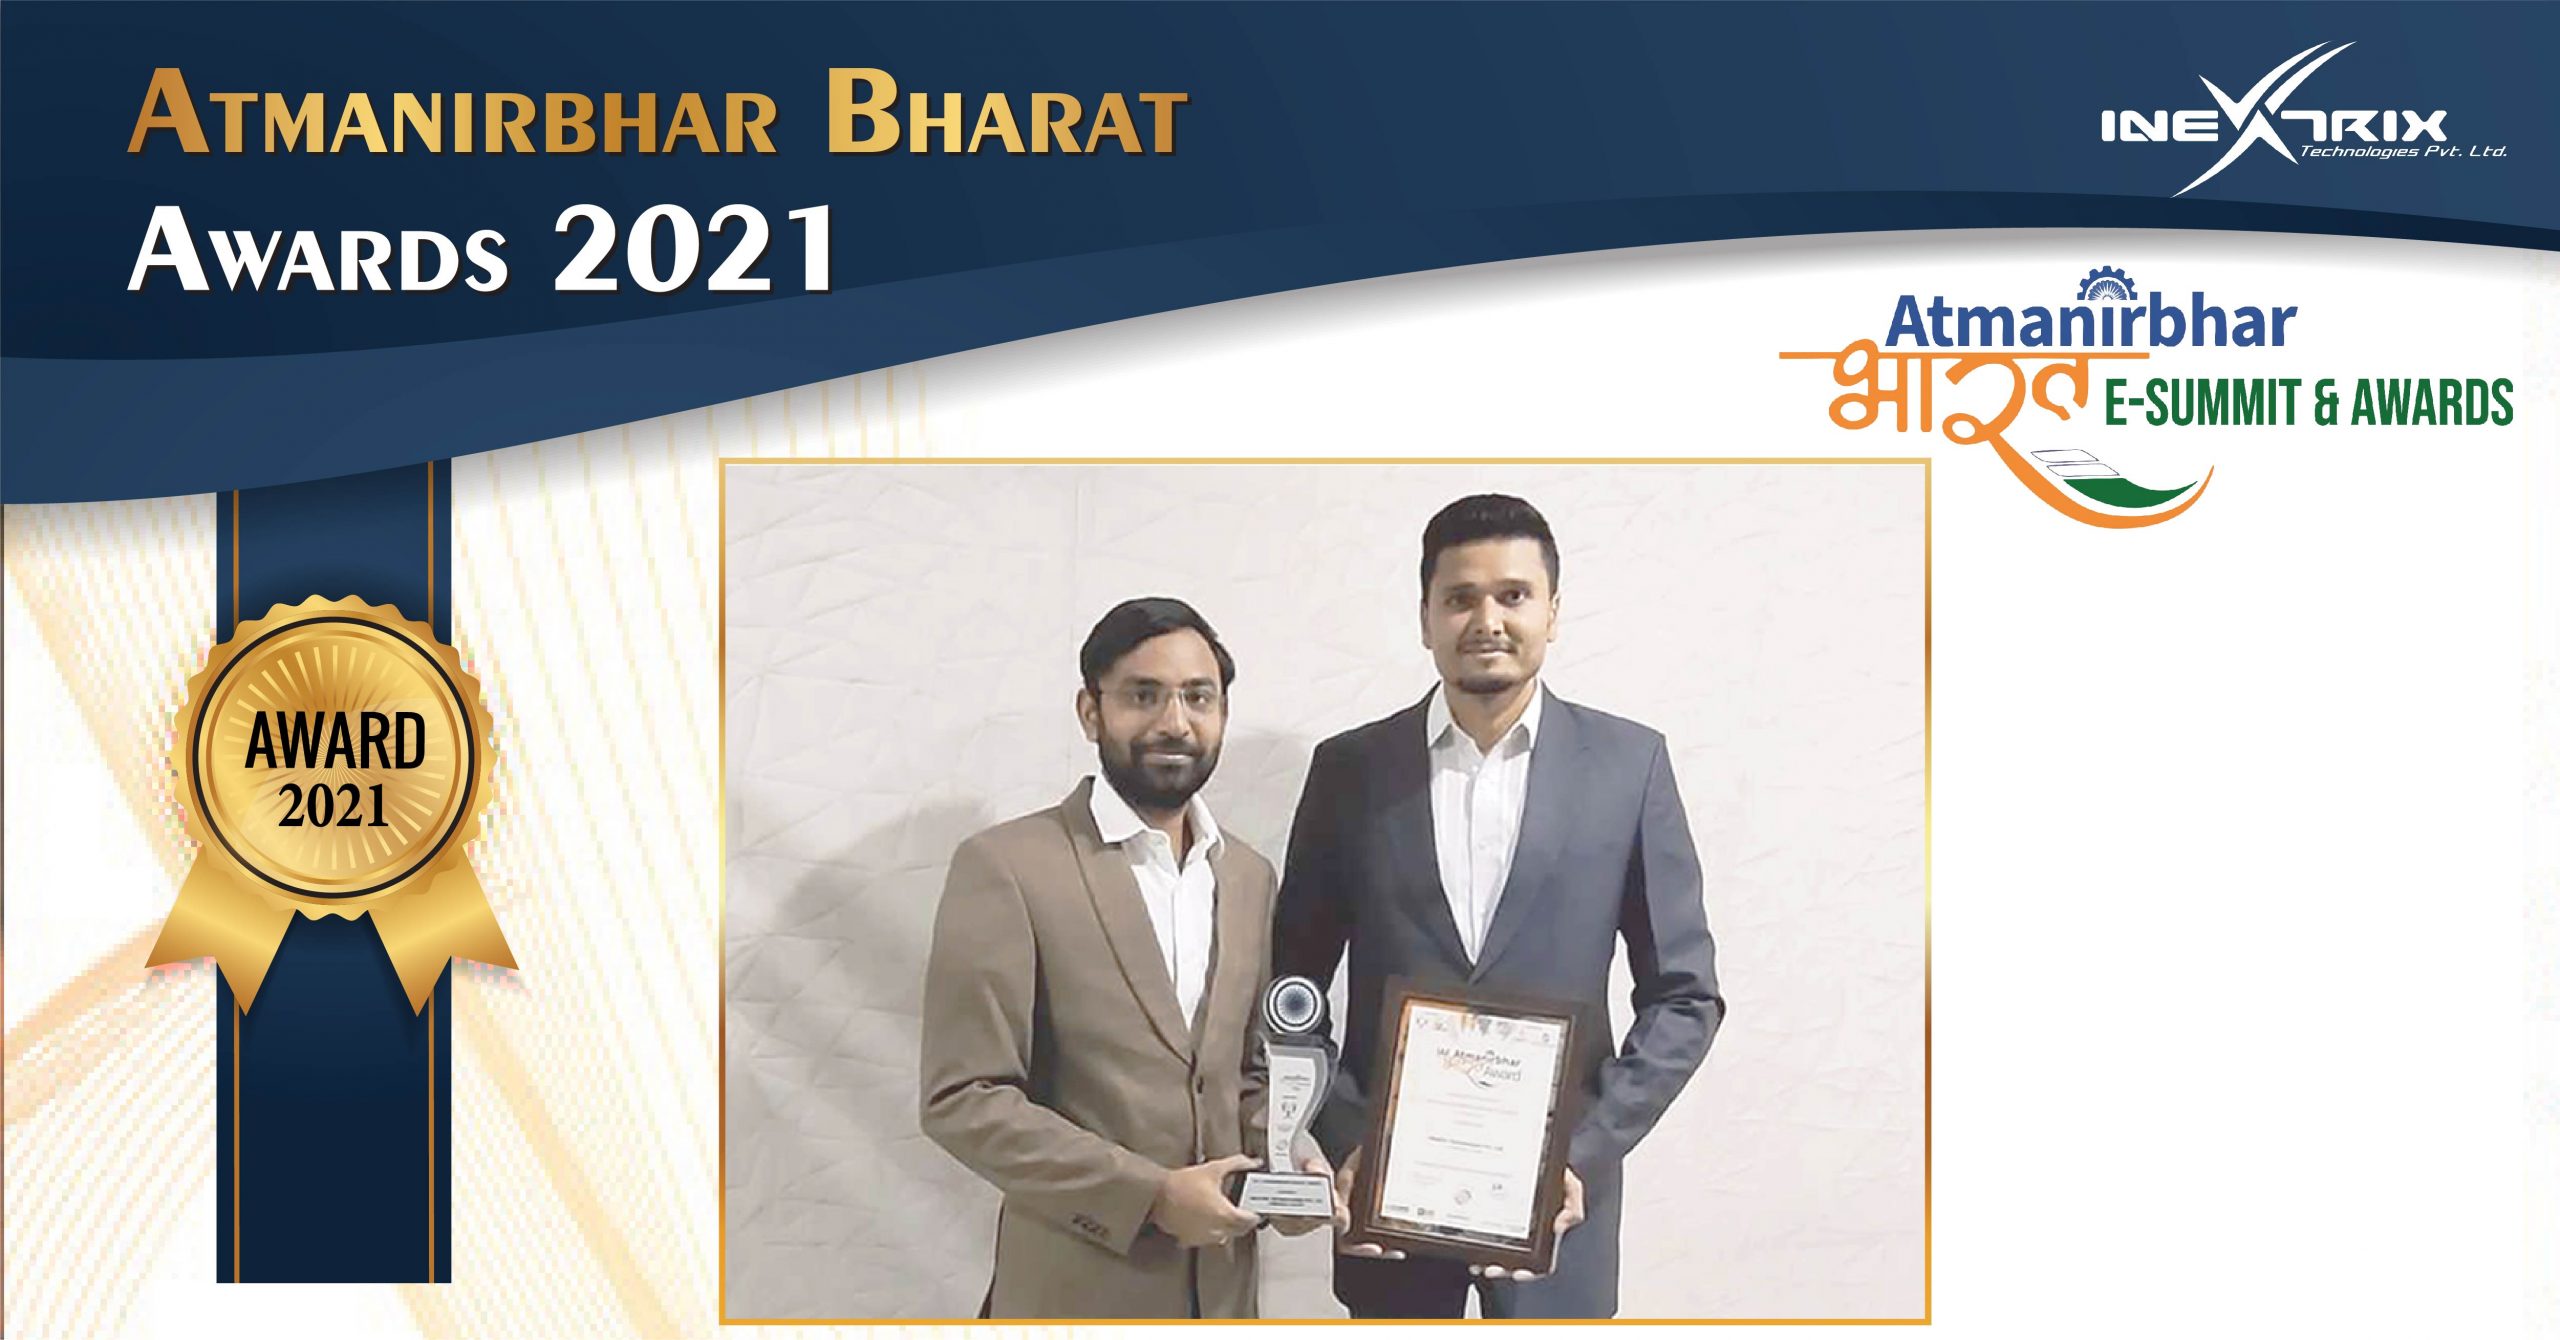 Atmanirbhar Bharat Awards 2021